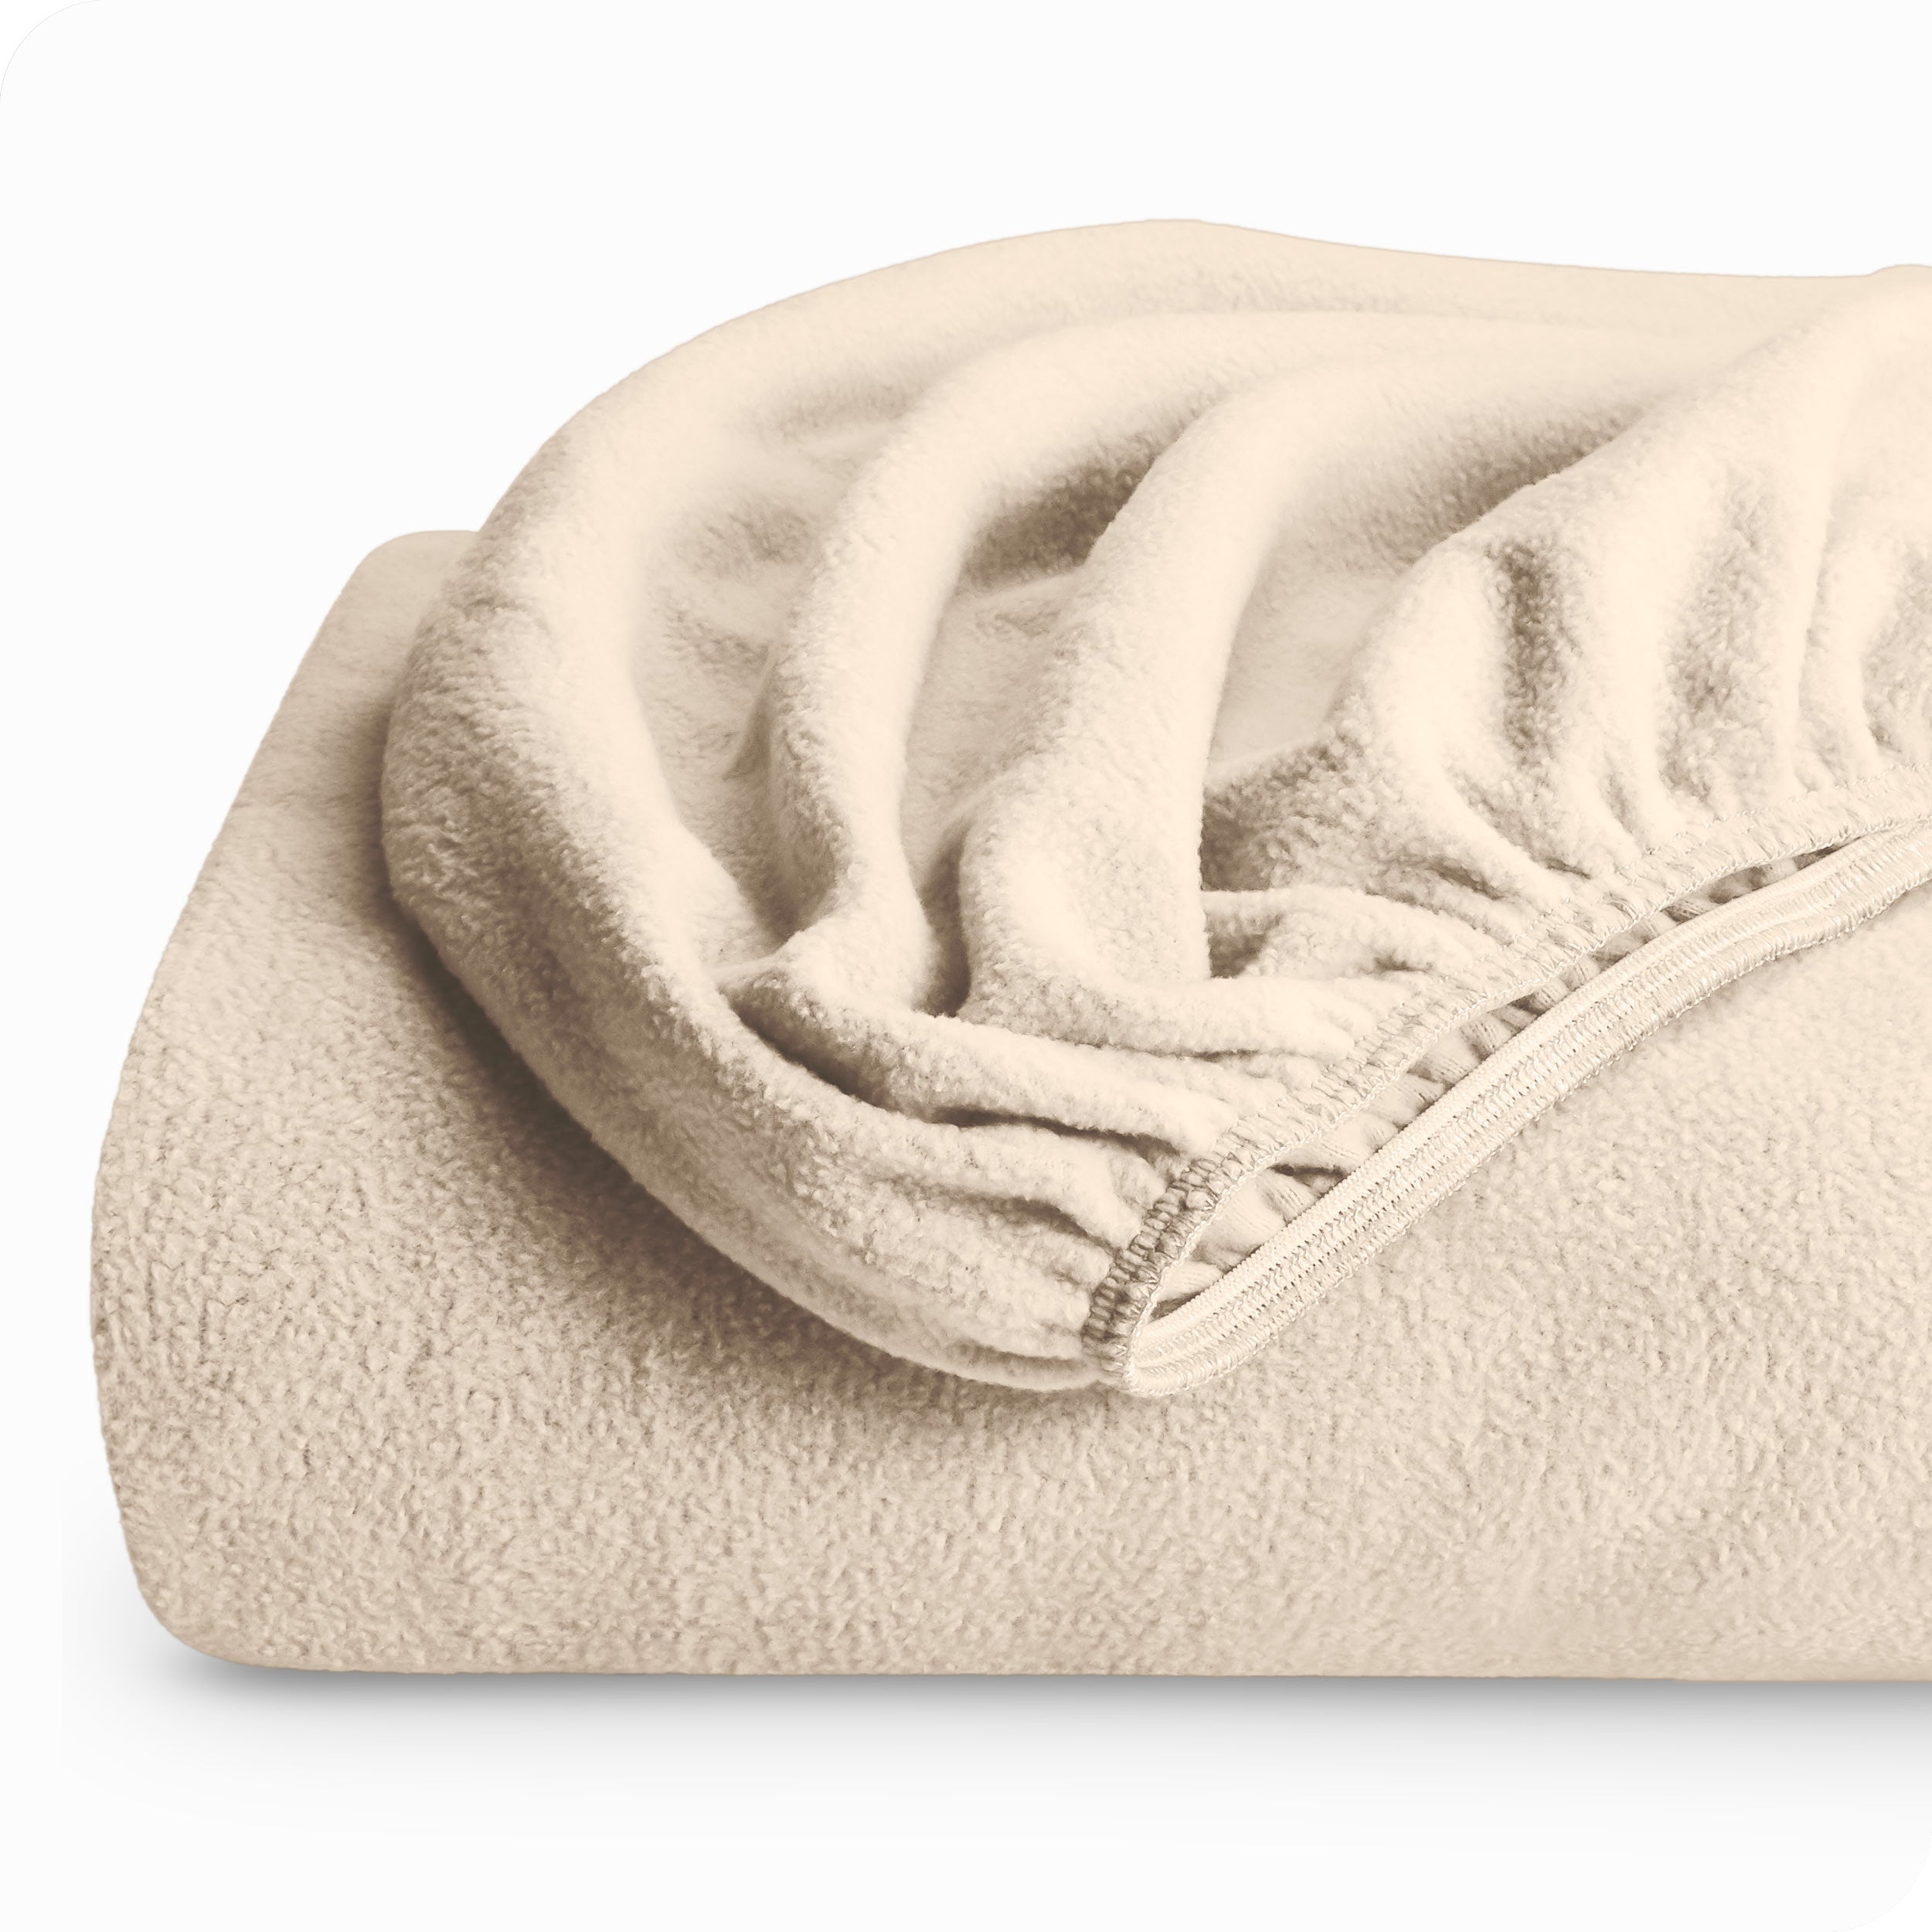 A folded polar fleece fitted sheet.